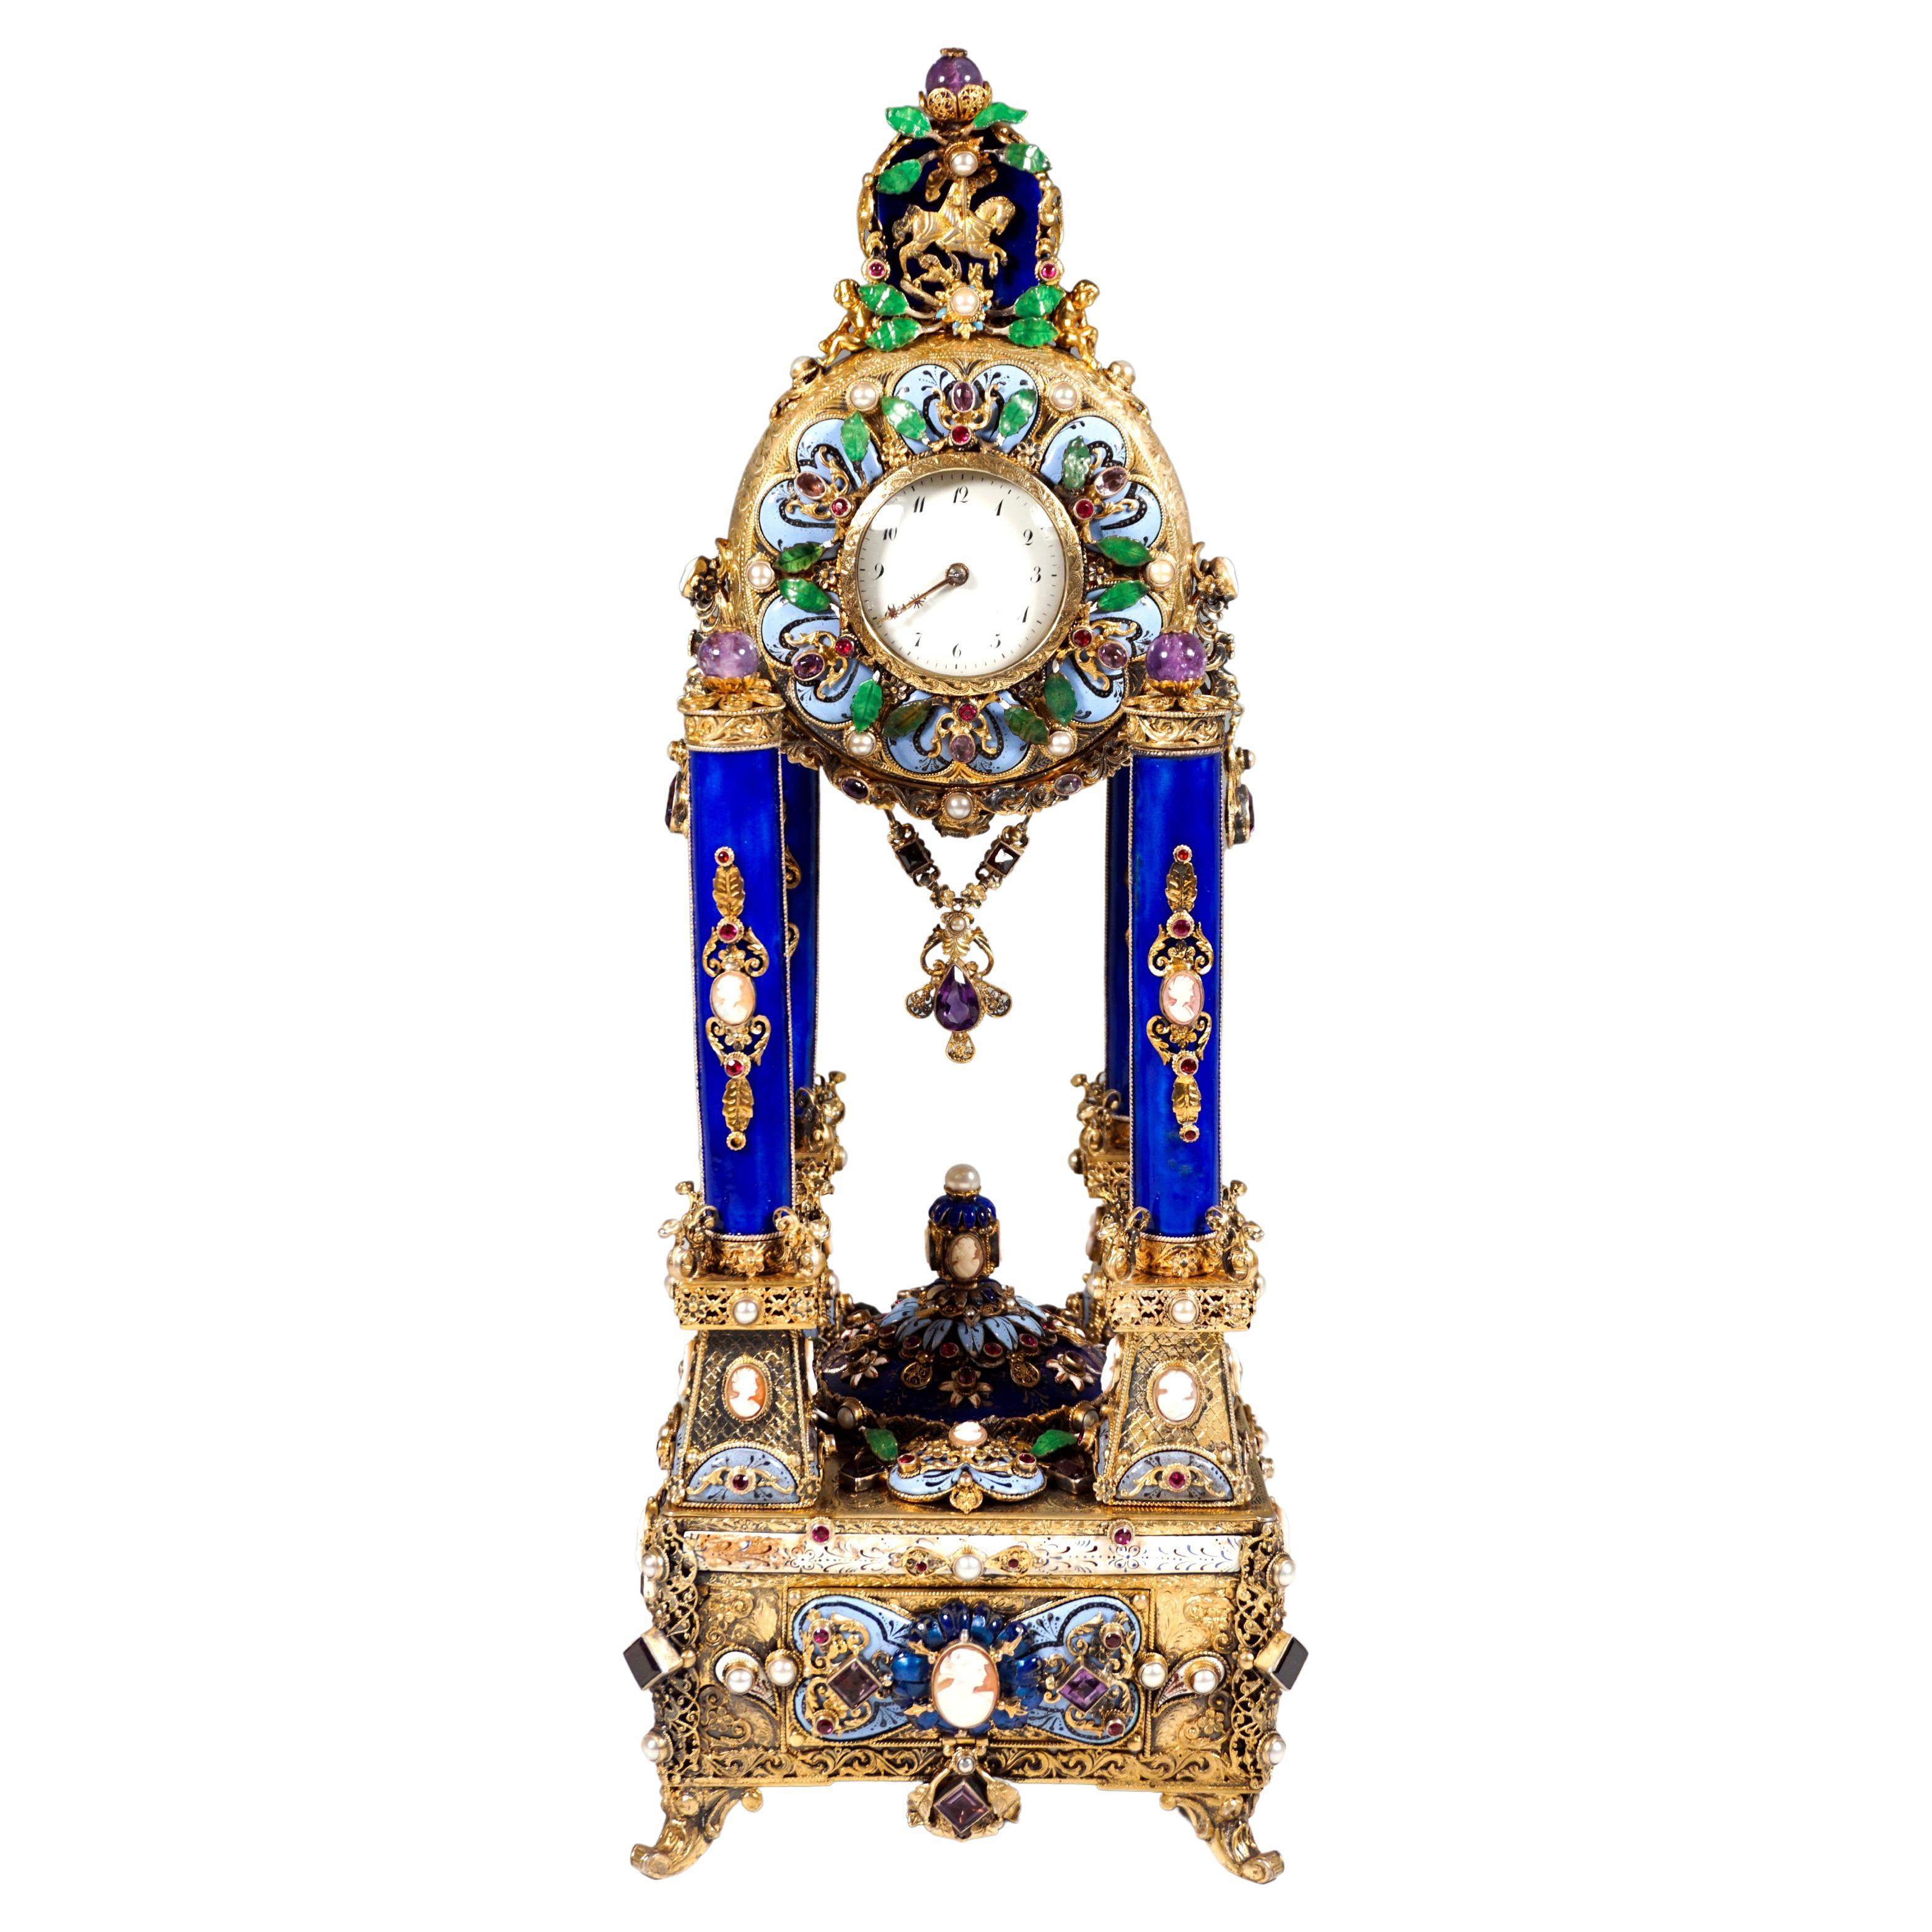 Viennese Silver Historicism Splendour Clock with Musical Movement, Around 1880